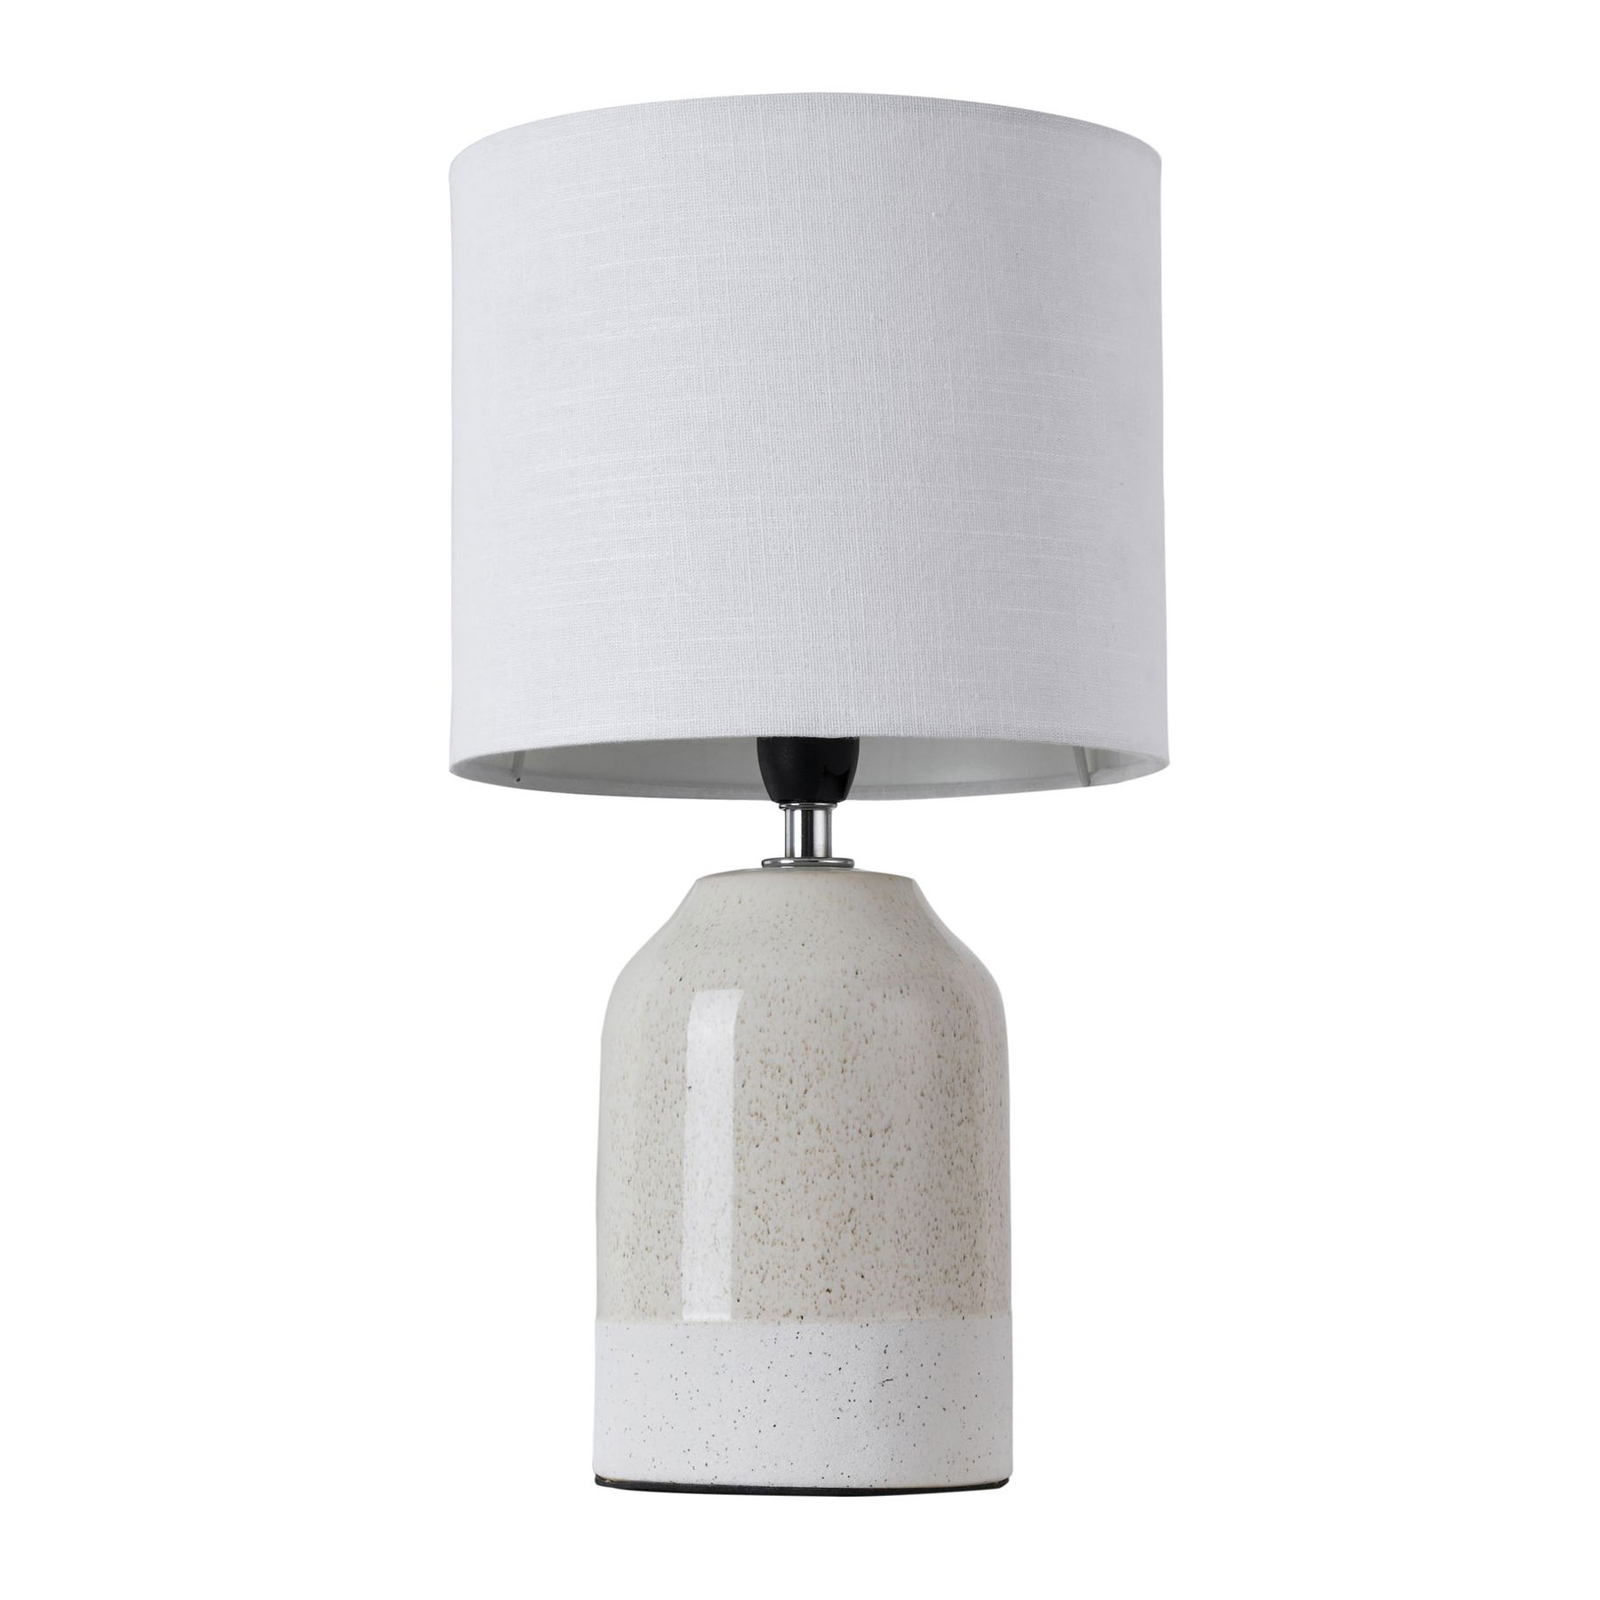 Pauleen Sandy Glow bordlampe, hvit/beige